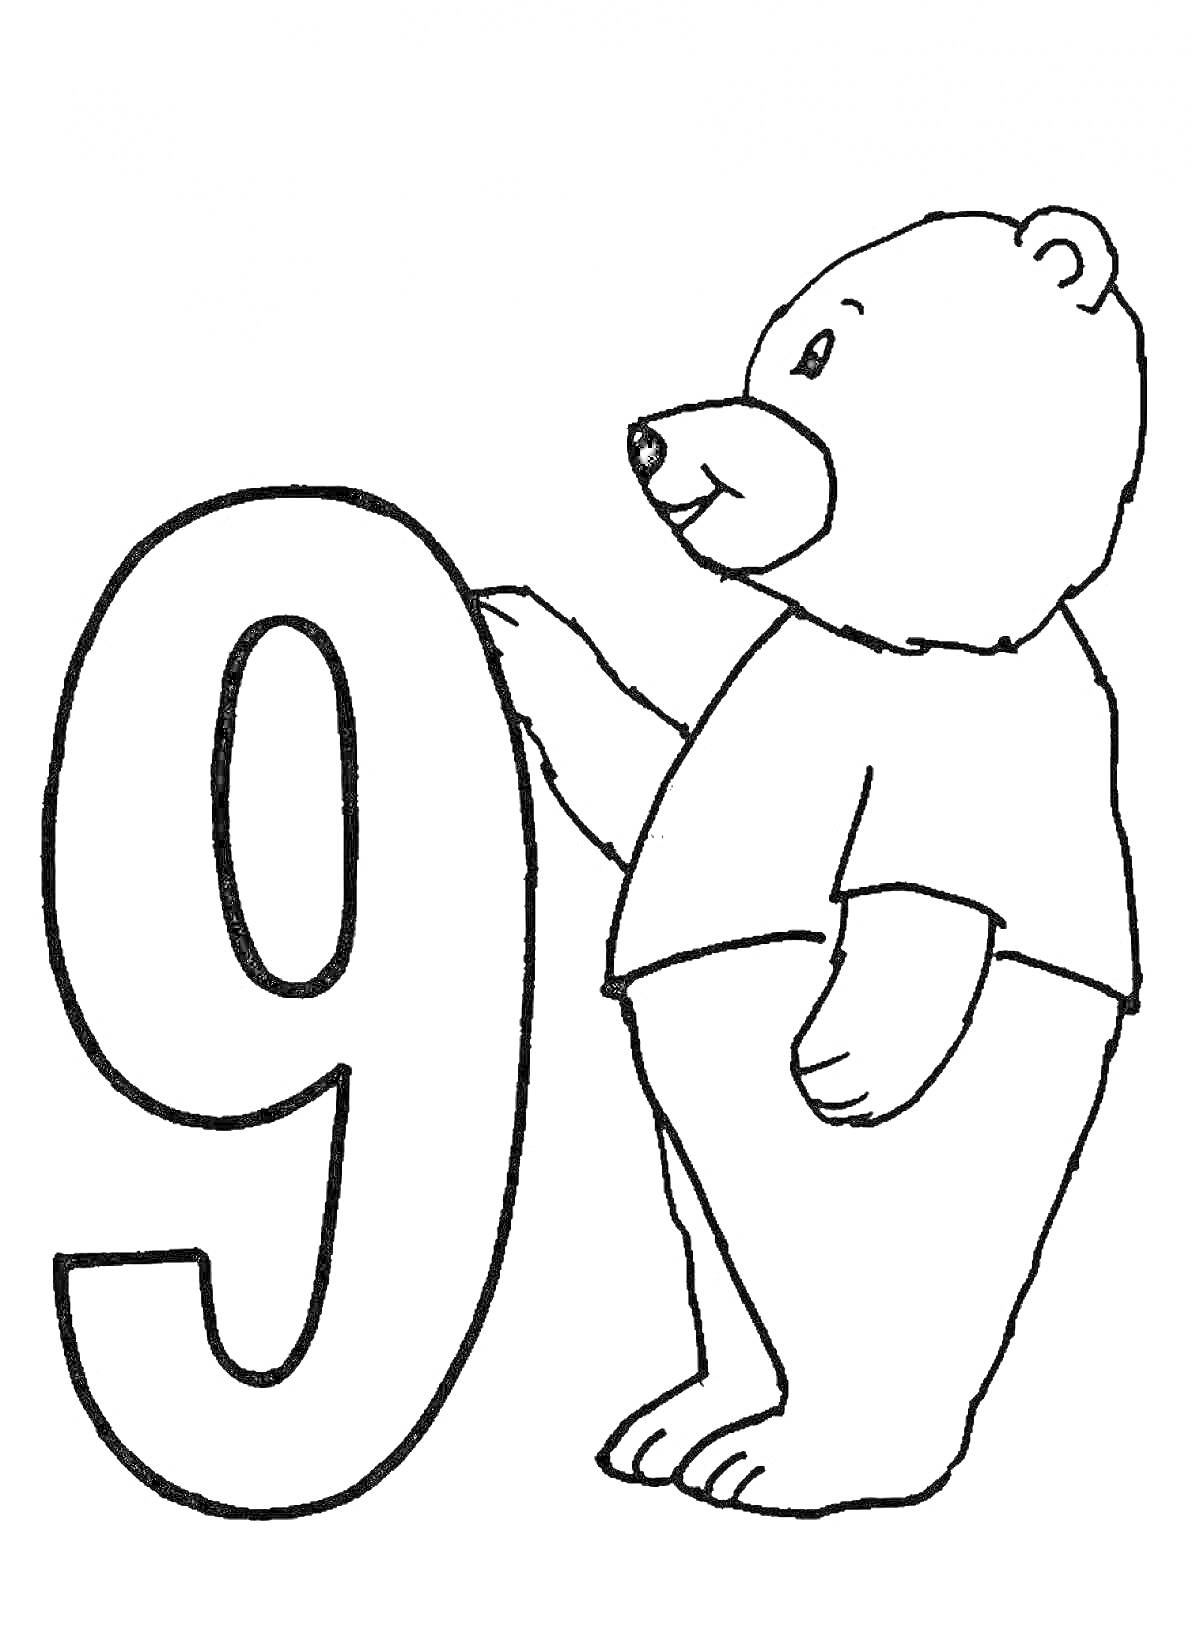 На раскраске изображено: Цифра 9, Медведь, Цифры, Животные